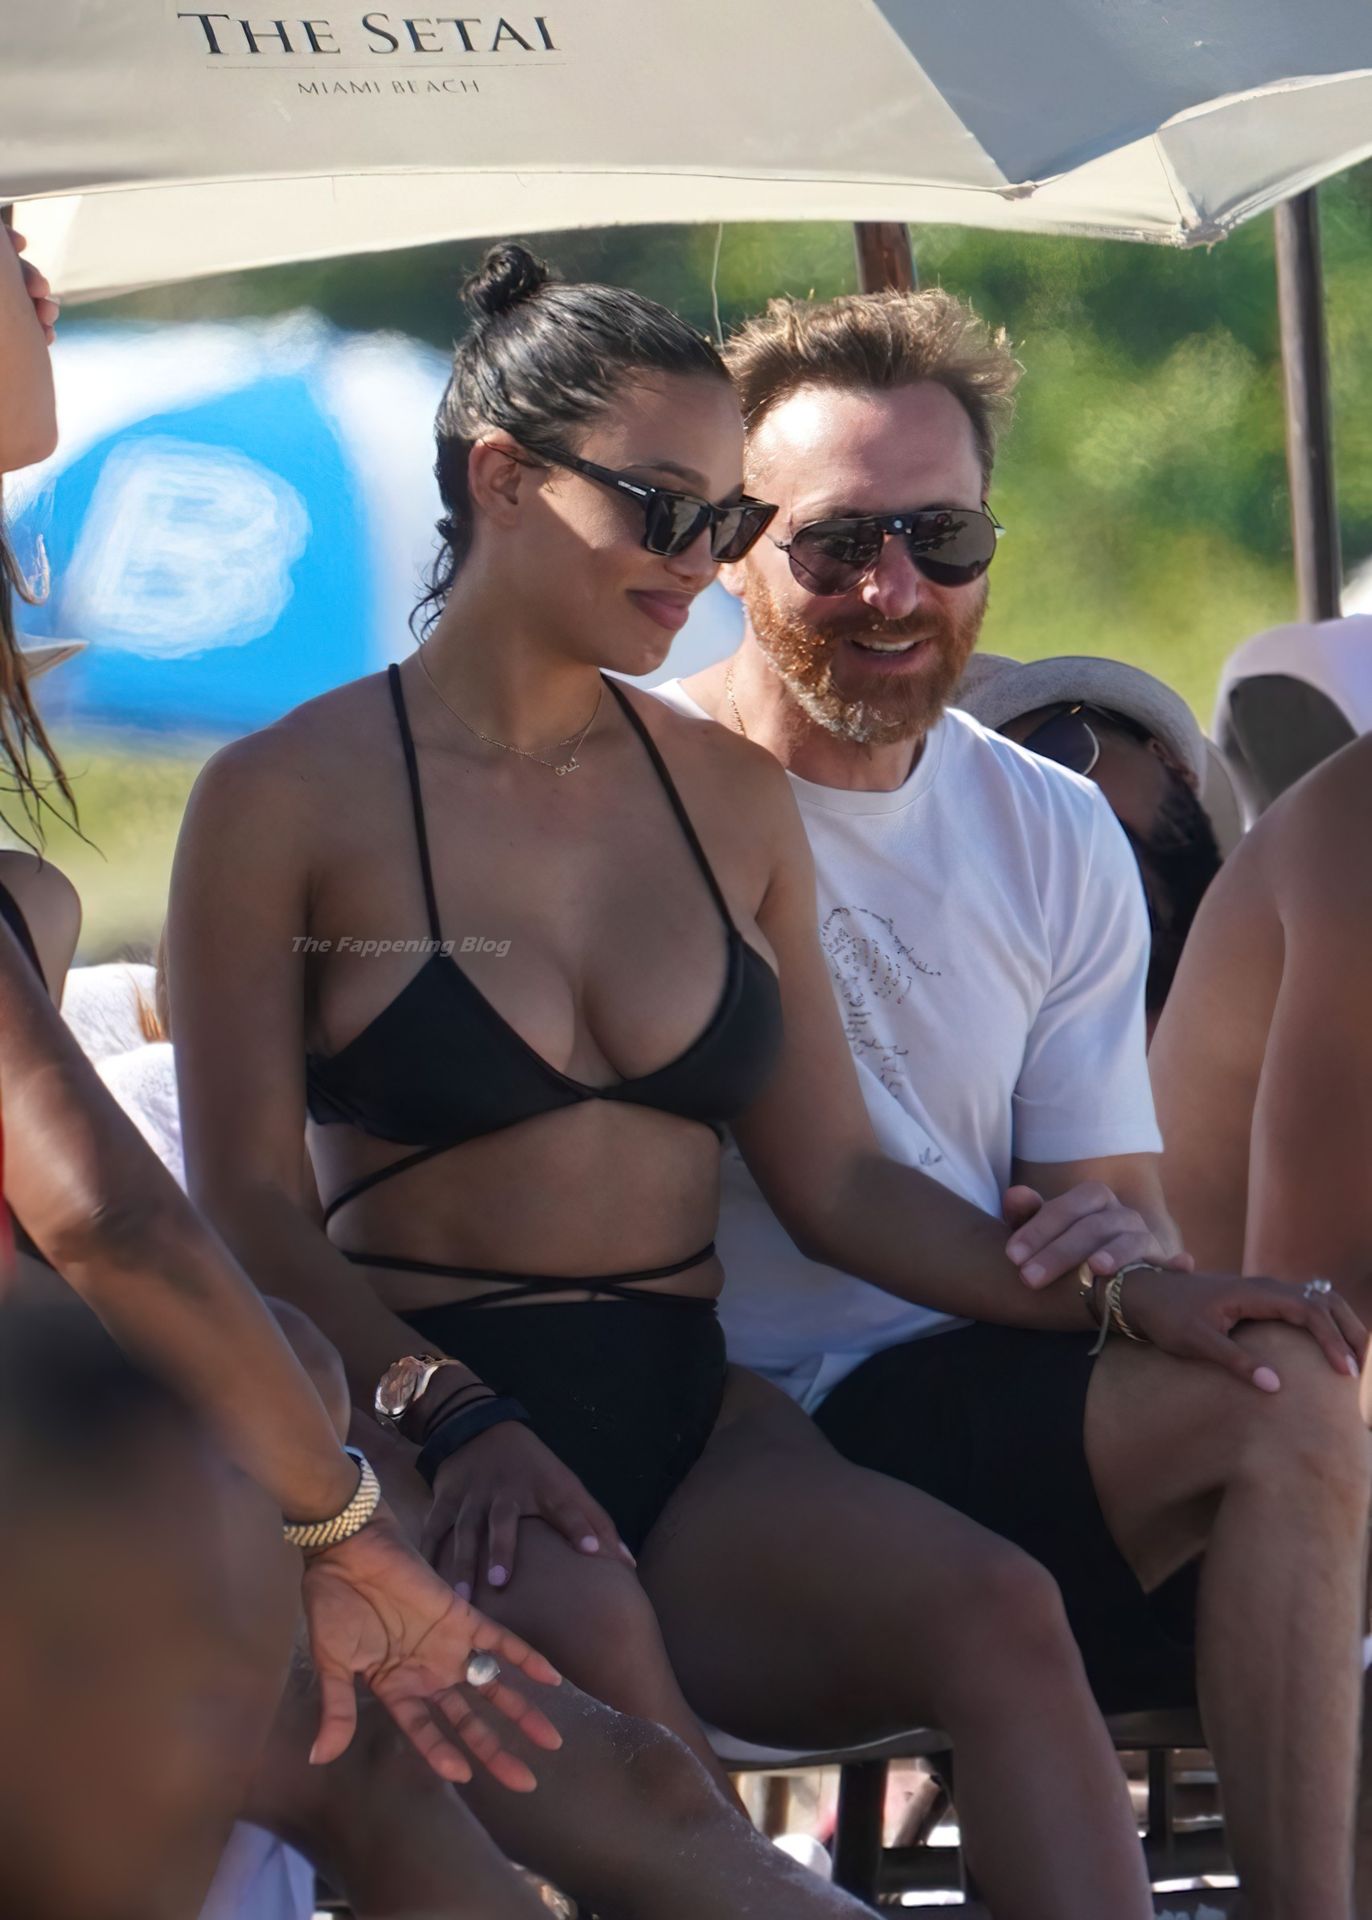 DJ David Guetta  Jessica Ledon are Seen at The Beach in Miami (19 Photos)